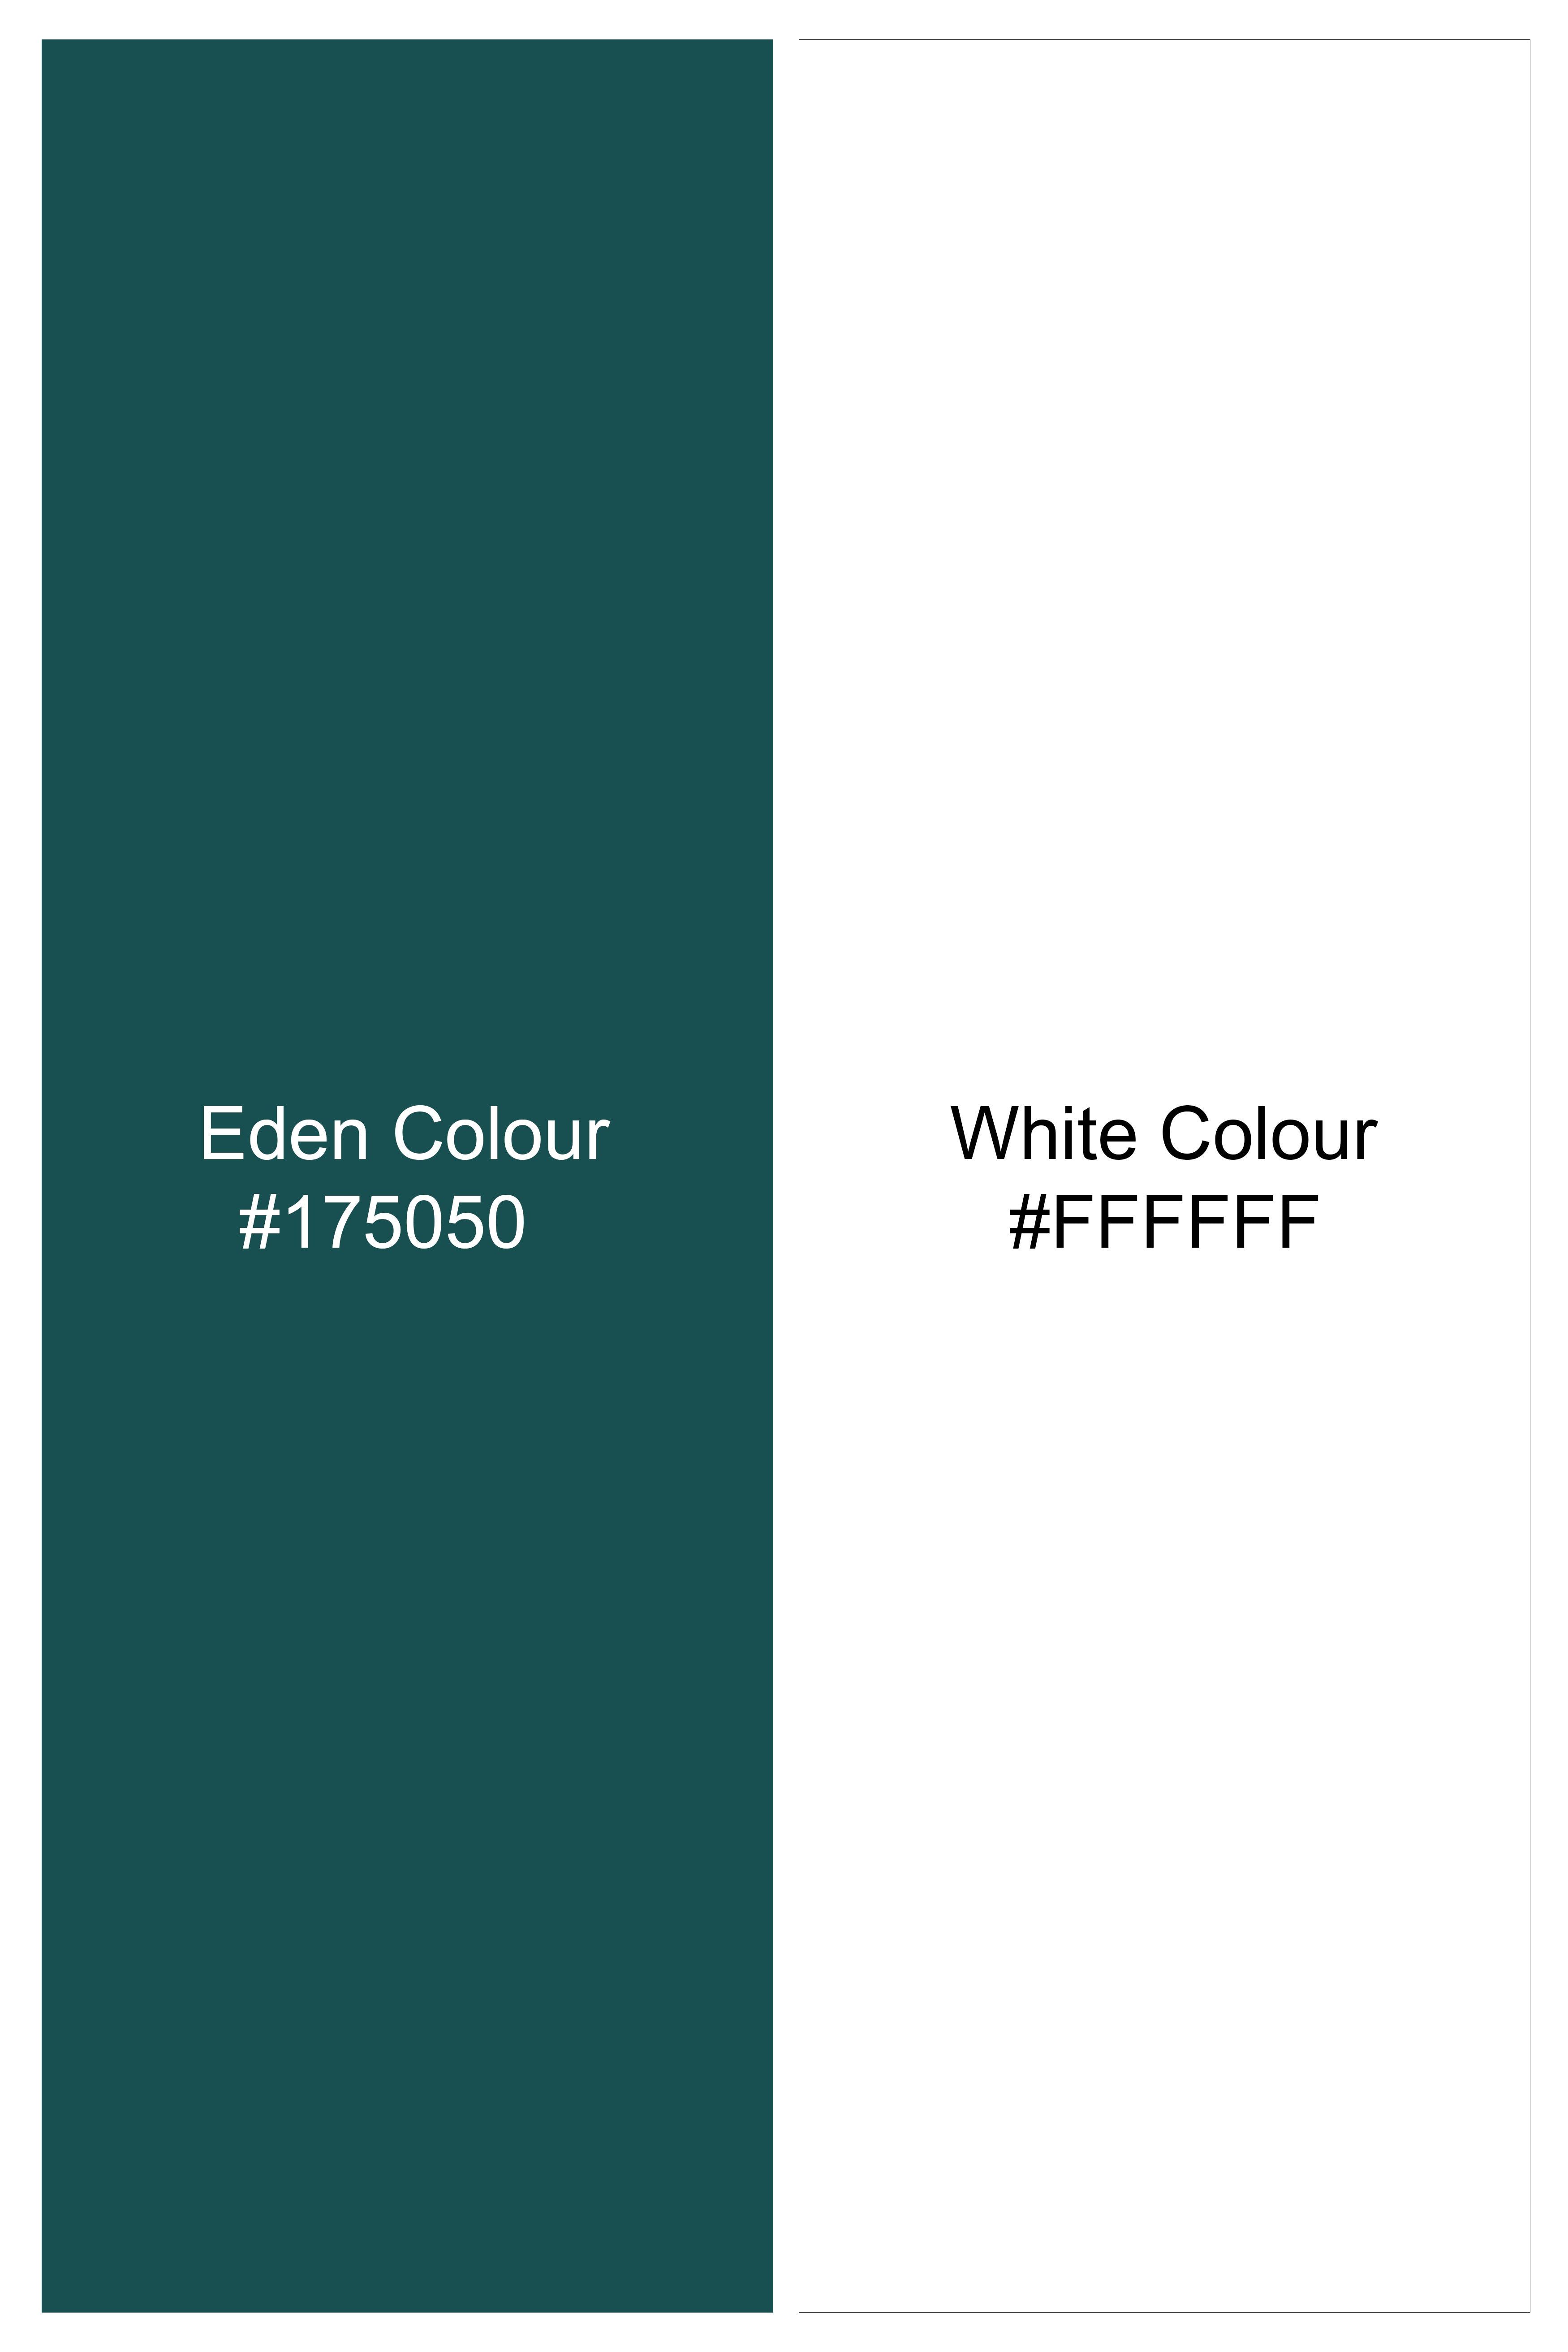 Eden Green Dobby Textured Premium Giza Cotton Shirt